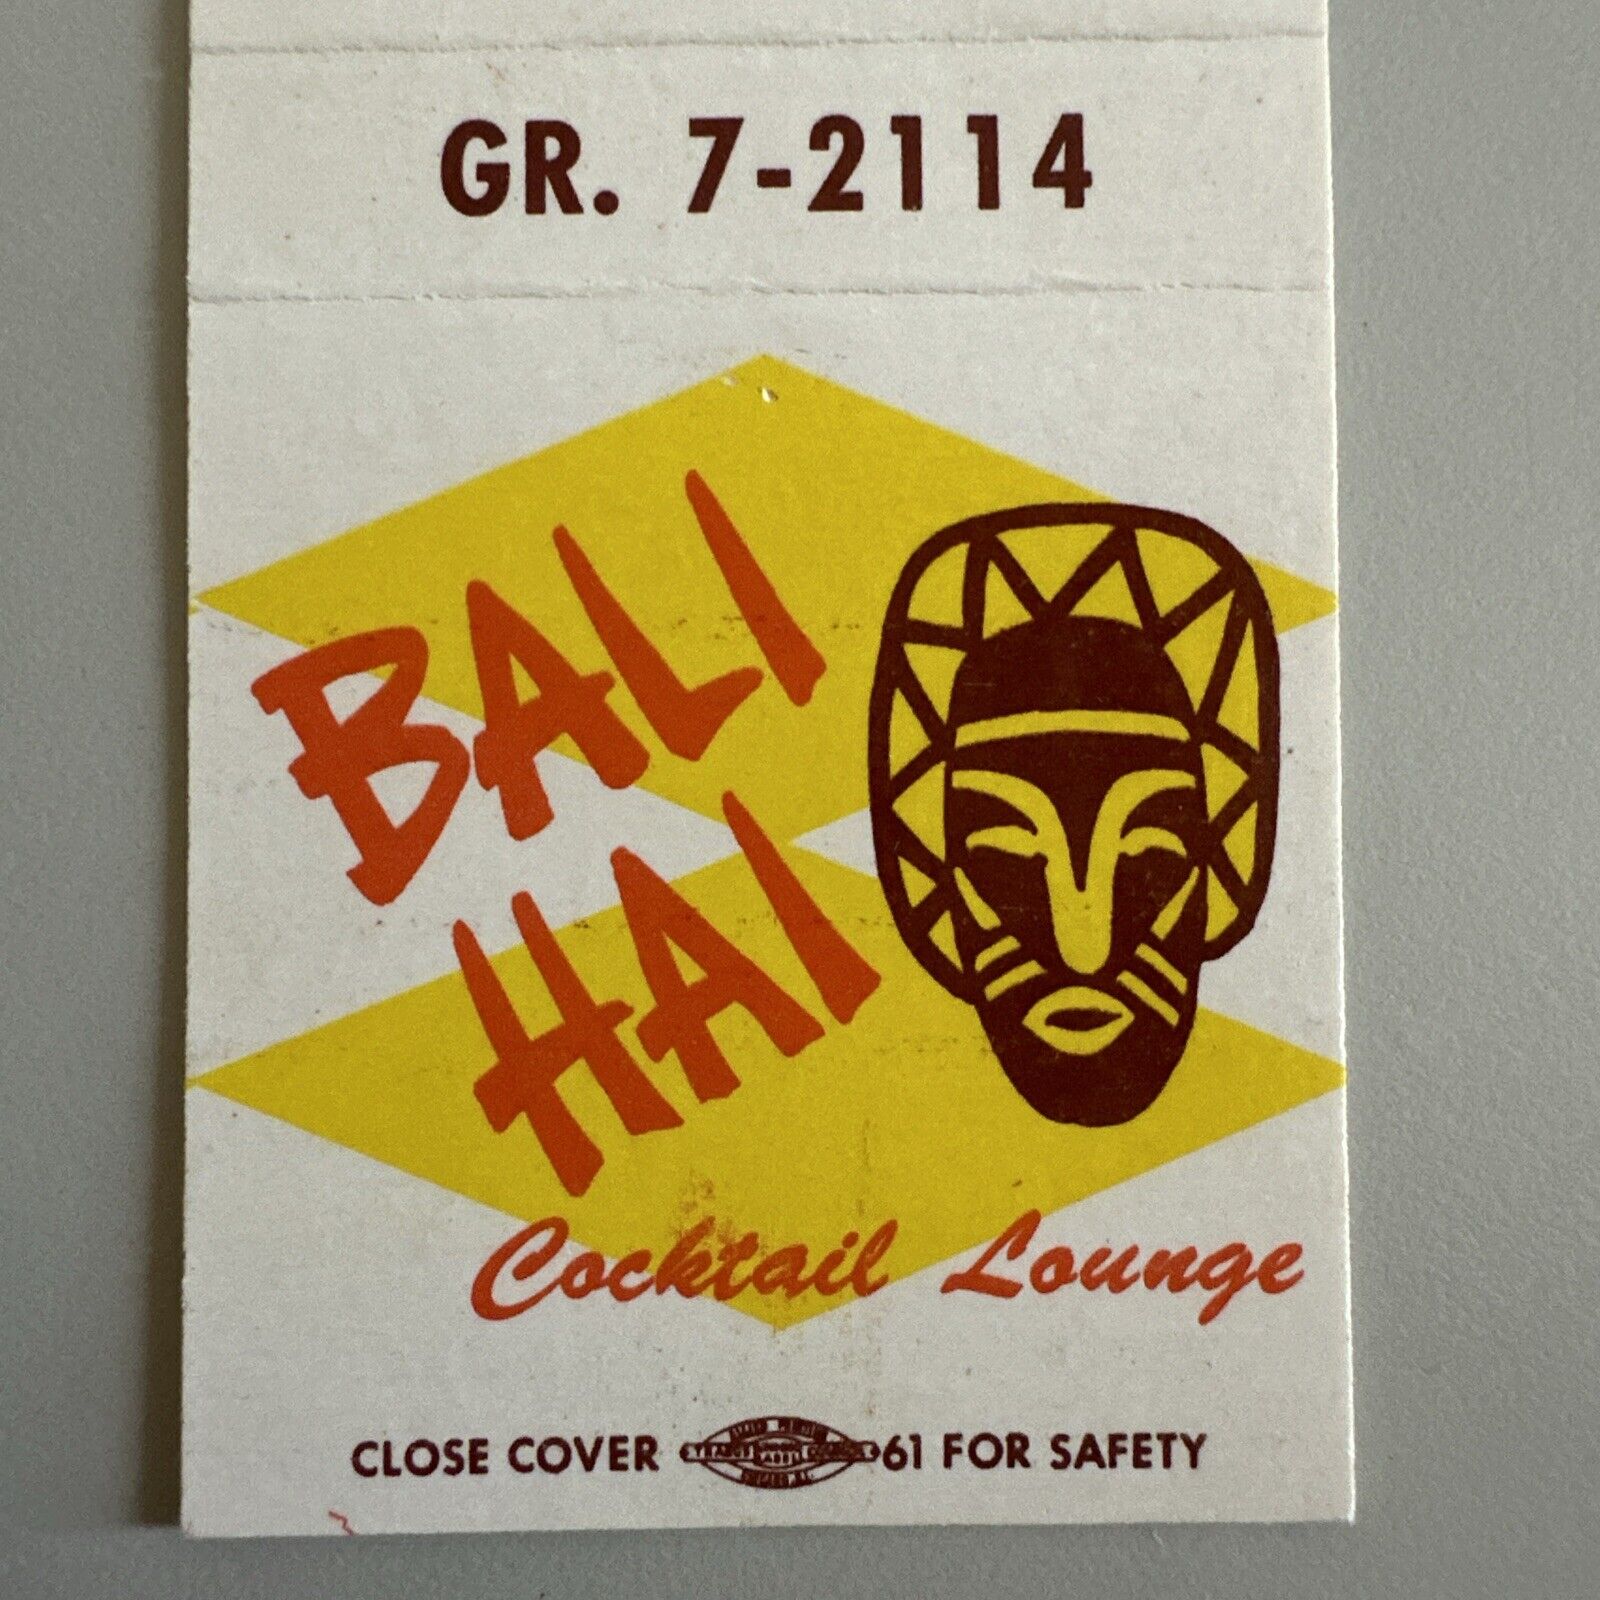 Vintage 1960s Bali Hai Tiki Bar Massillon OH Matchbook Cover